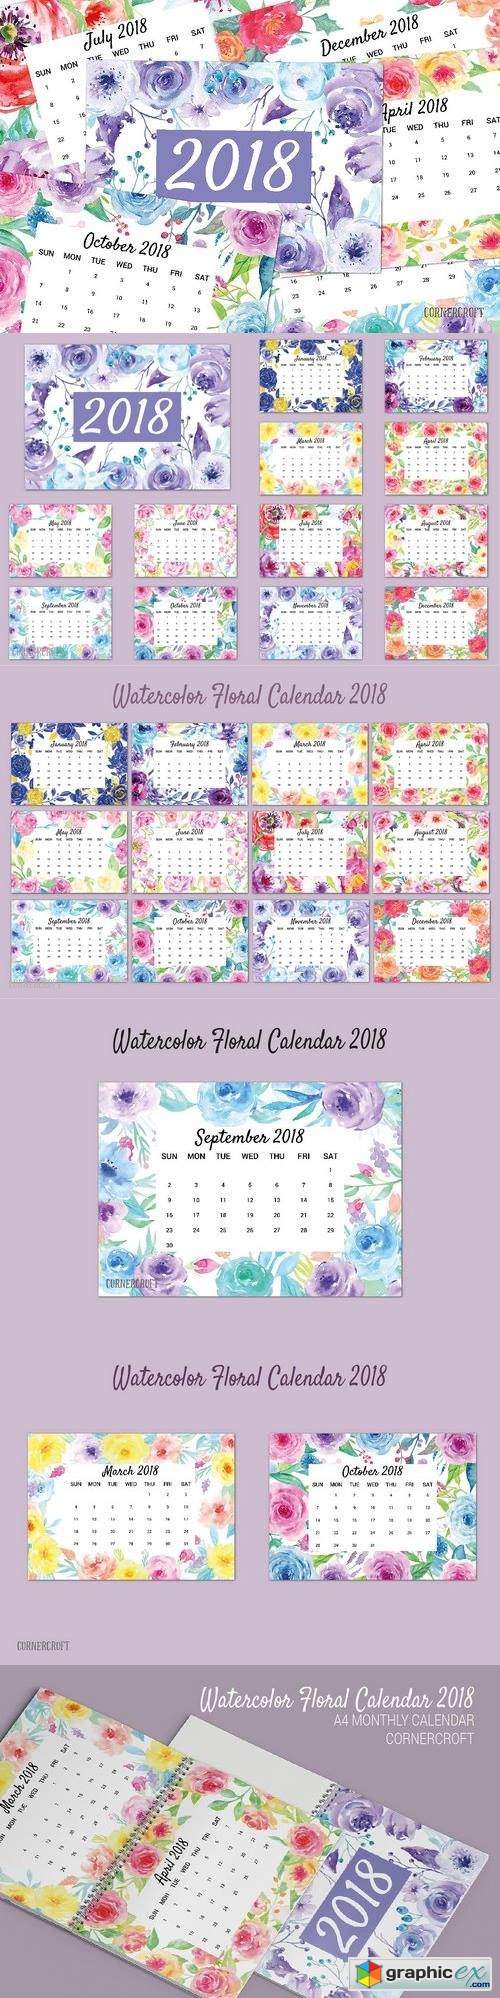 Watercolor Floral Calendar 2018